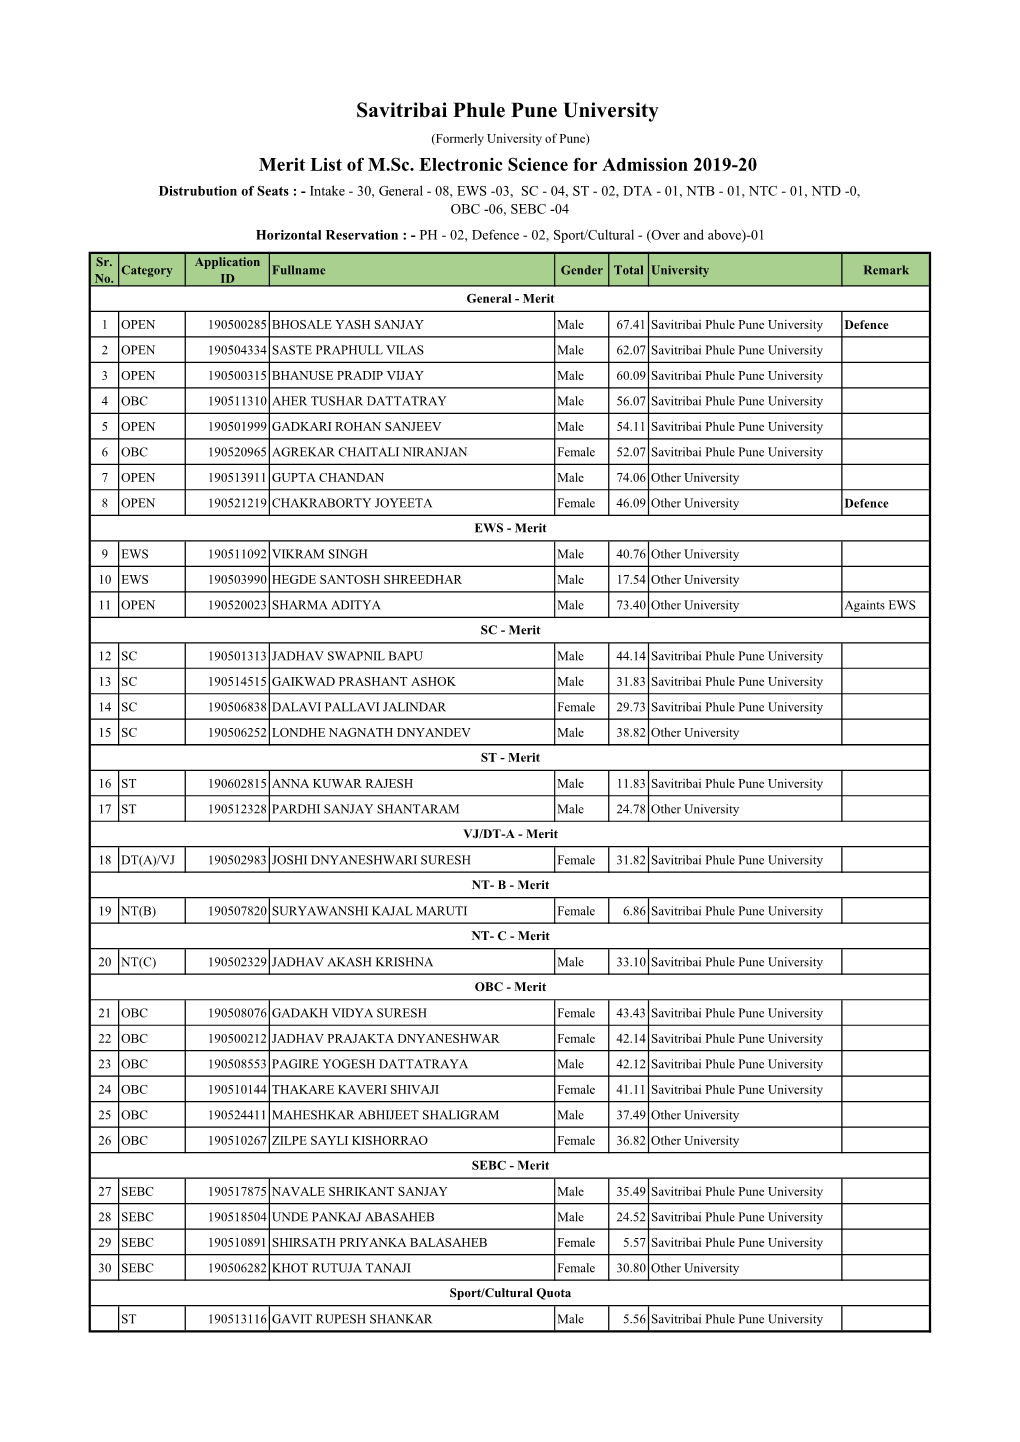 Savitribai Phule Pune University (Formerly University of Pune) Merit List of M.Sc